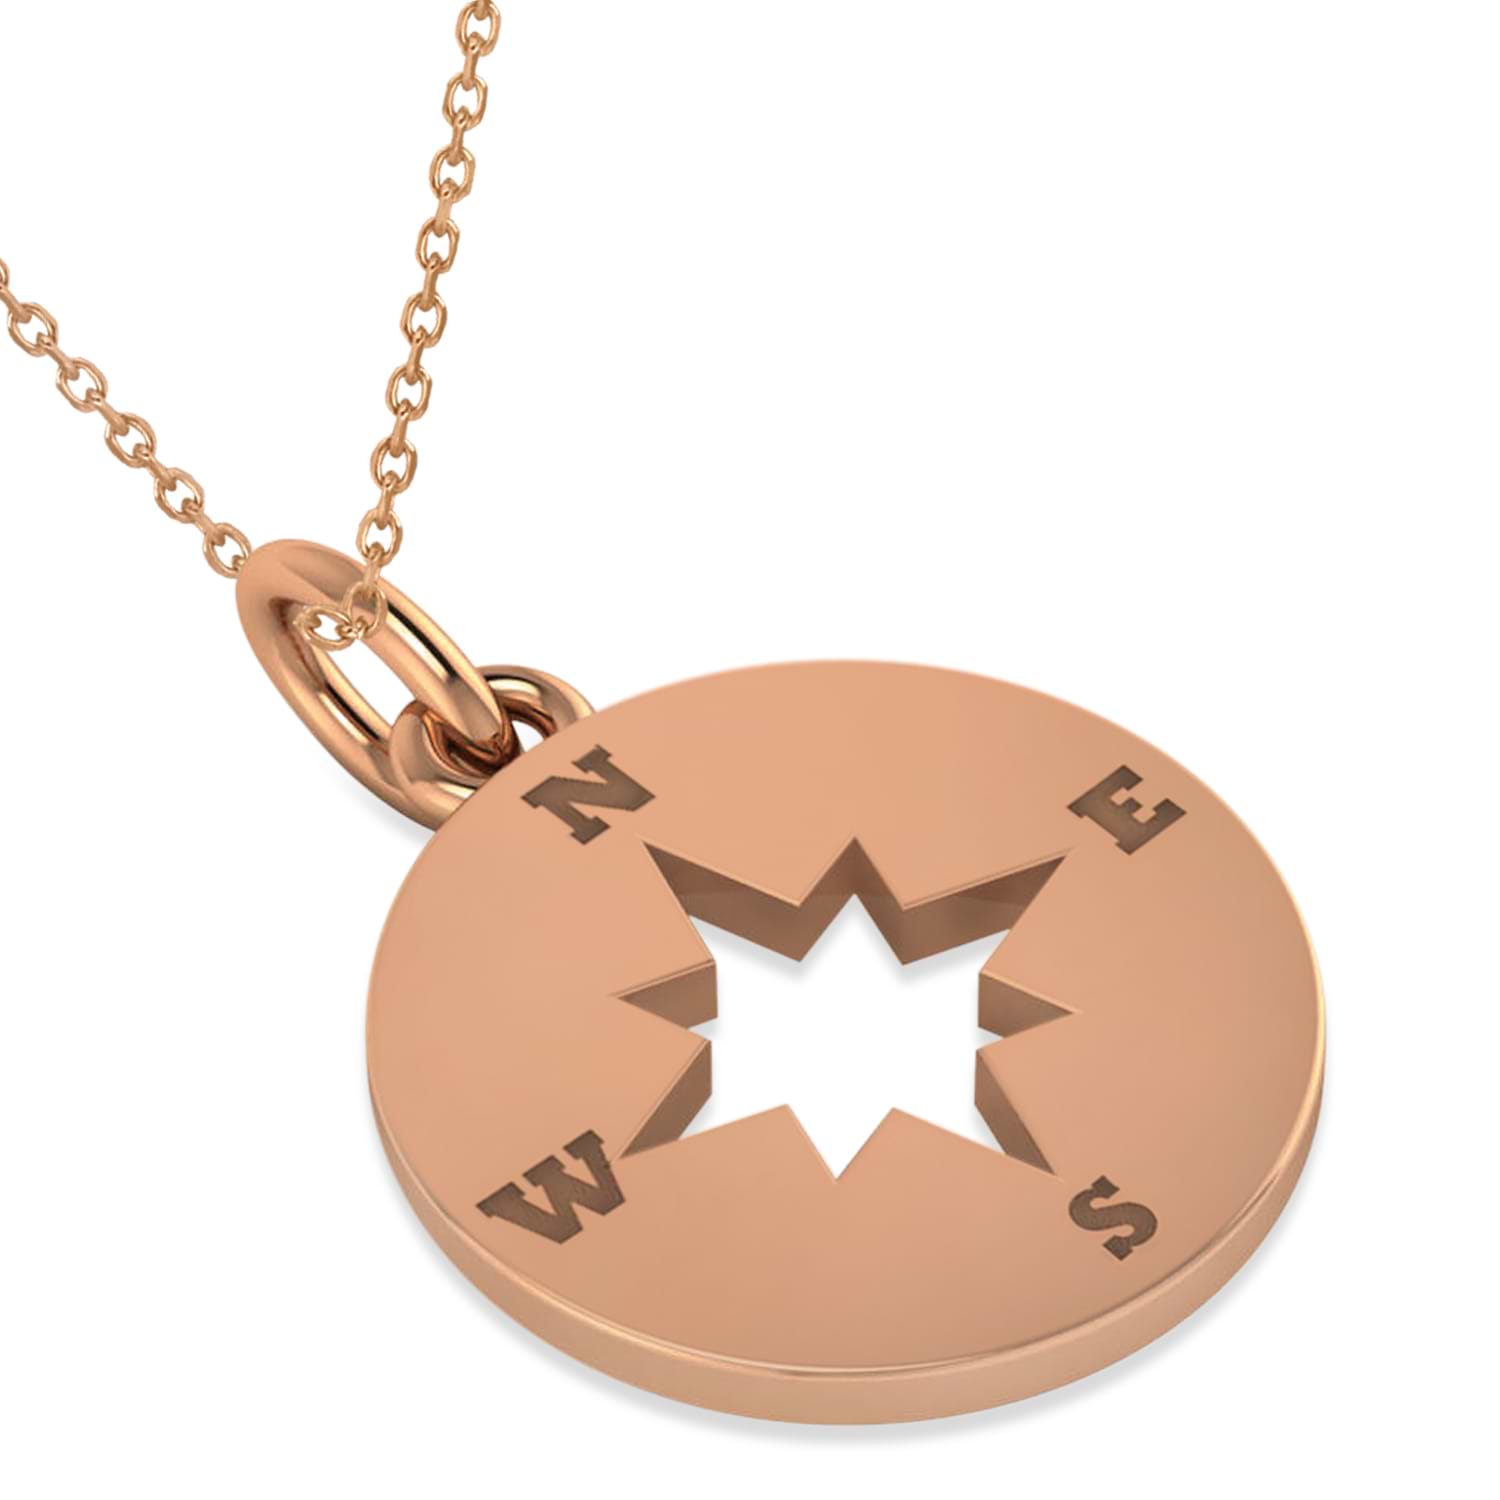 Navigational Compass Pendant Necklace 14k Rose Gold